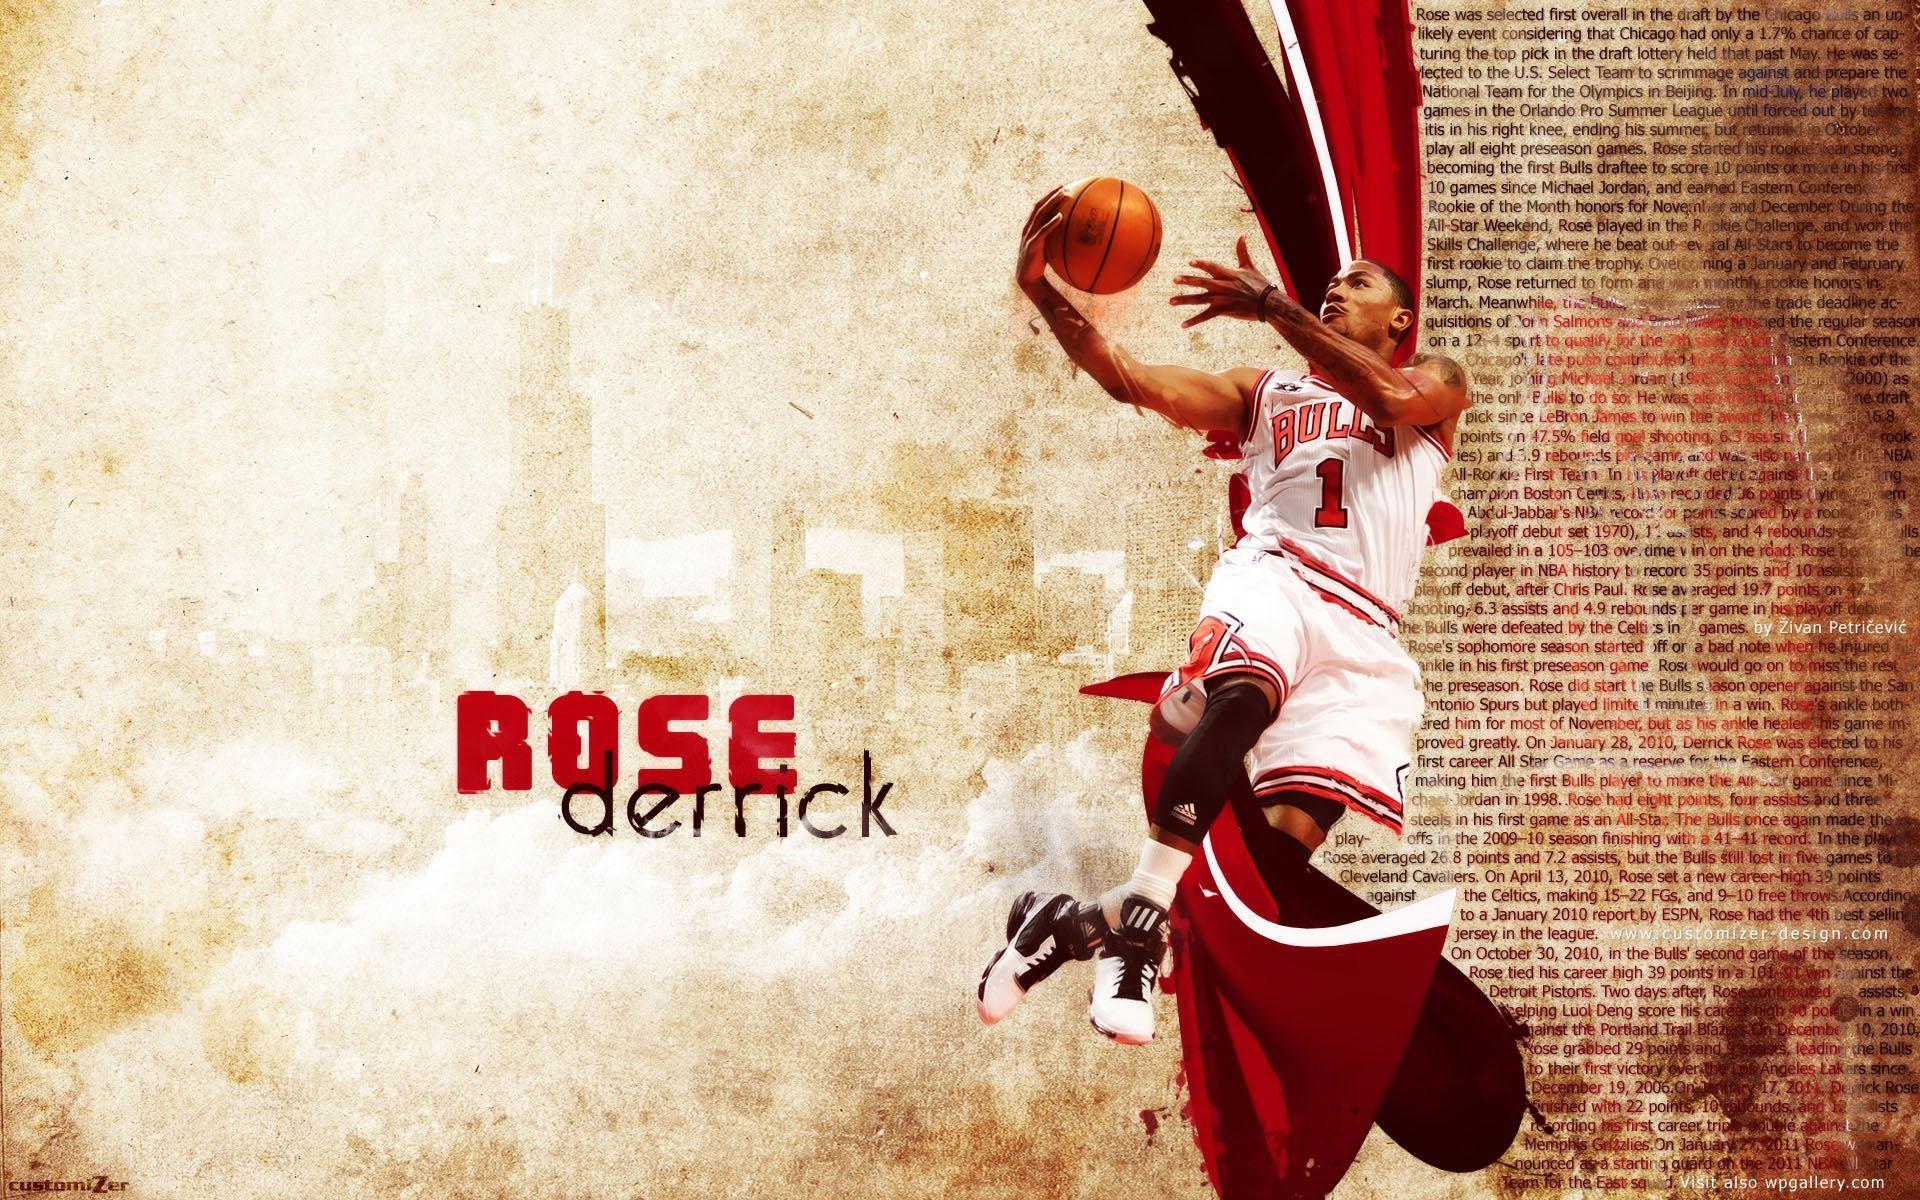 Derrick Rose Wallpaper. Basketball Wallpaper at BasketWallpaper